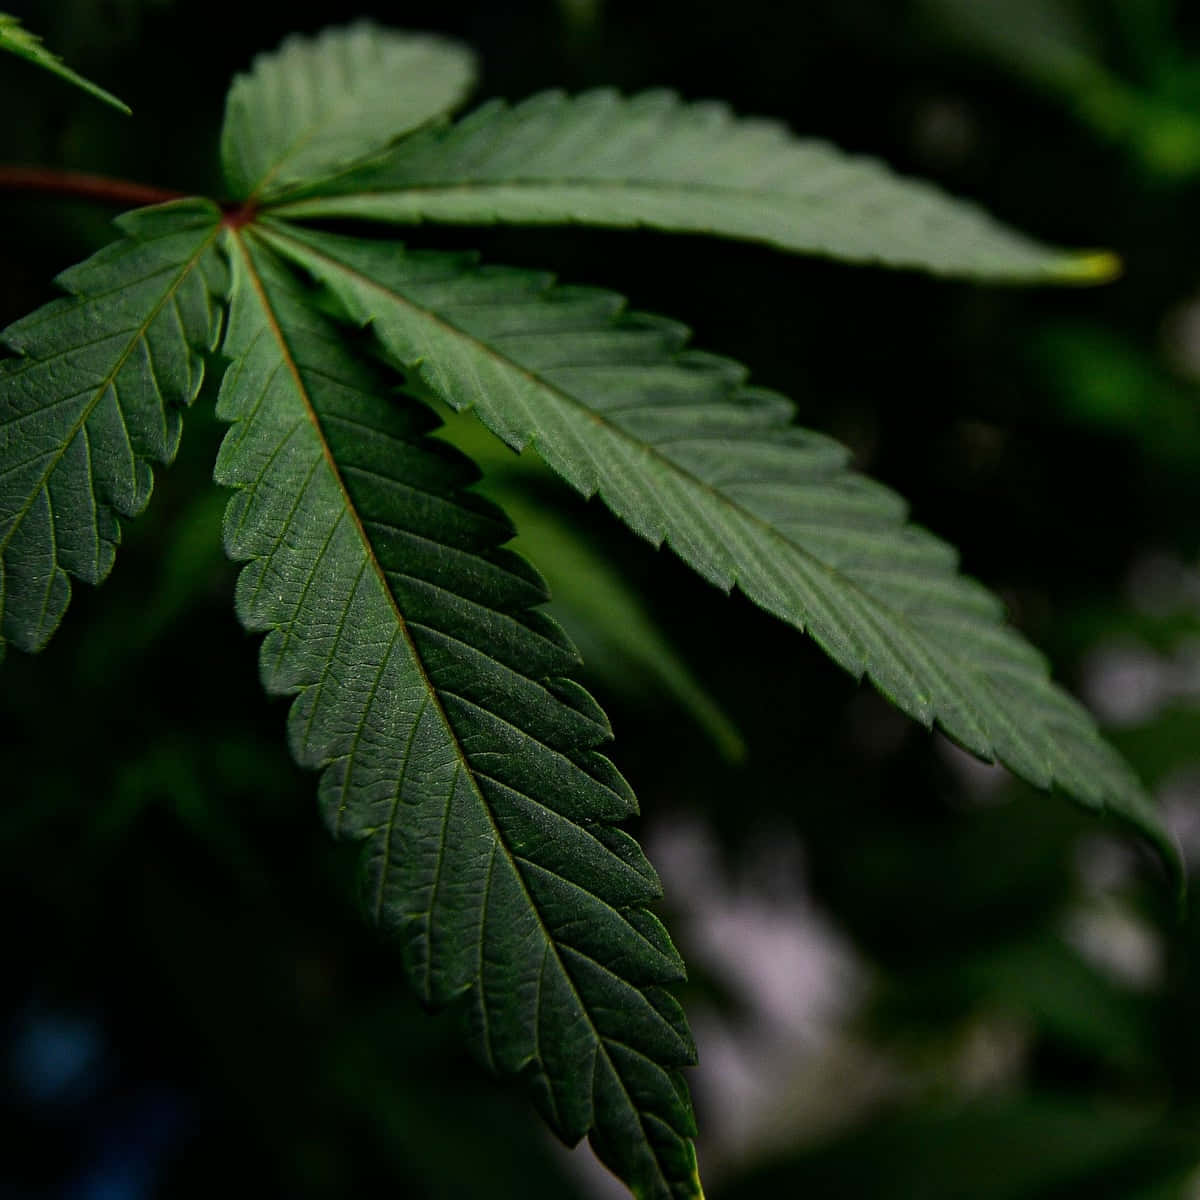 A close-up of vibrant marijuana plant buds on a dark background